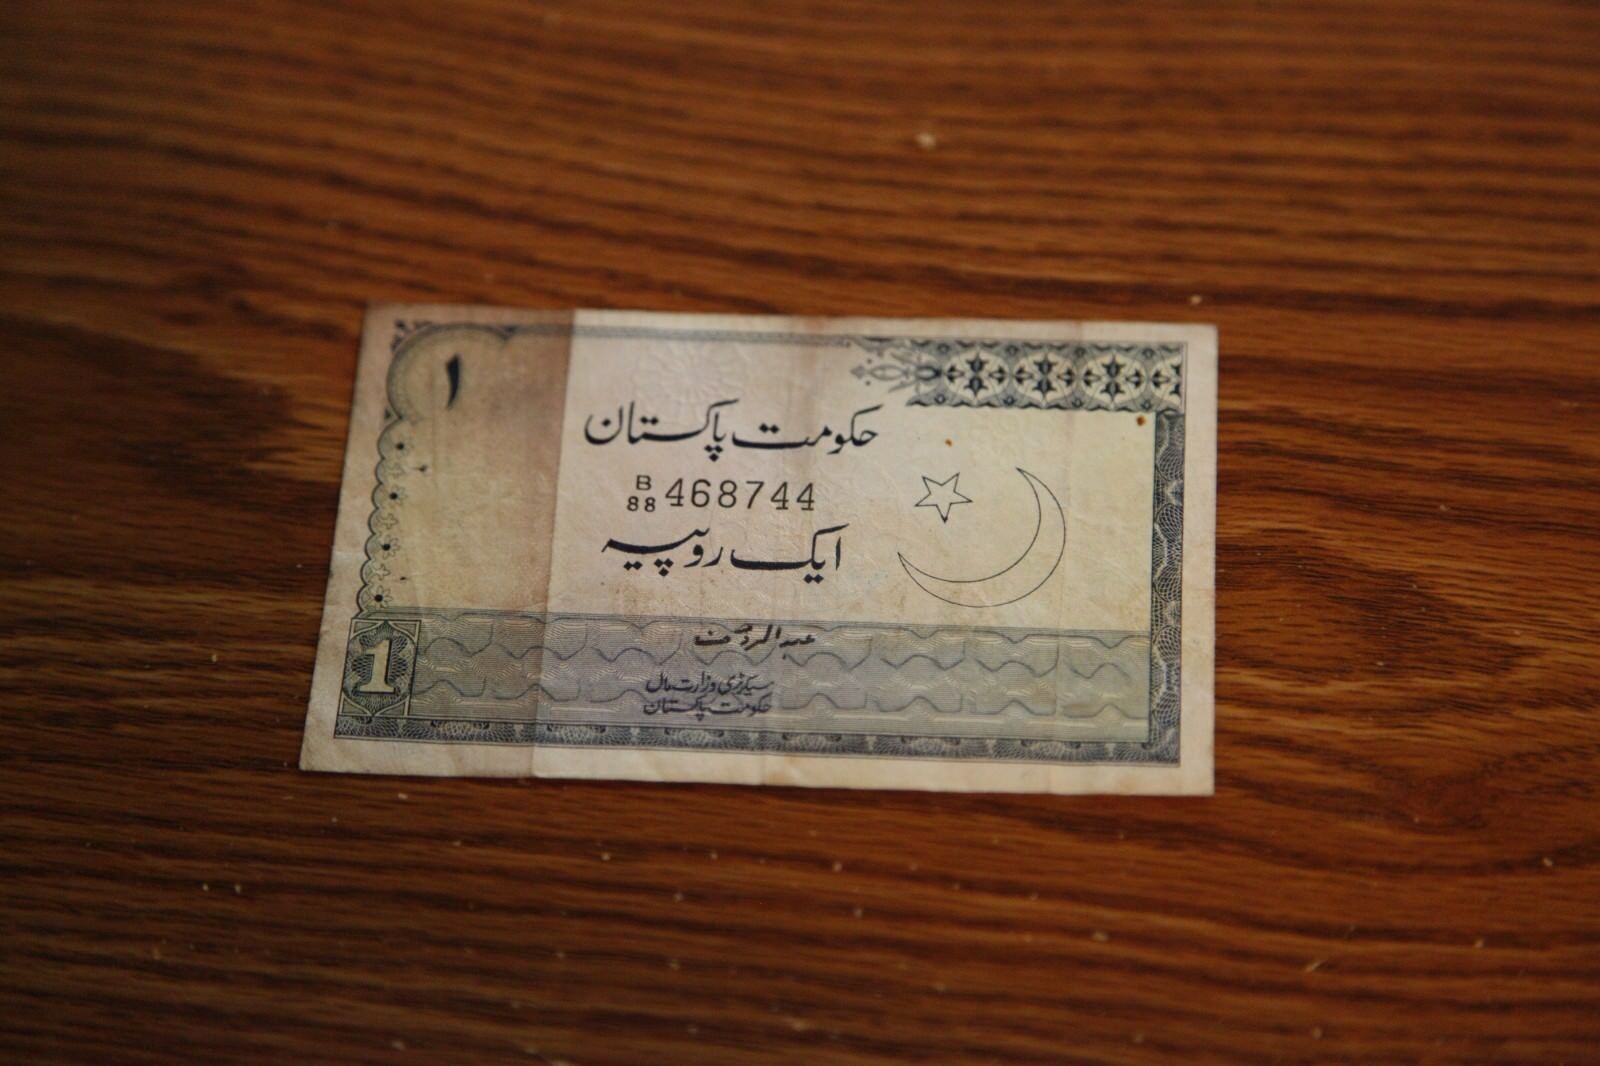 1974 One Rupee Pakistan Bank Note - Rare! (fair Condition, See Photos)